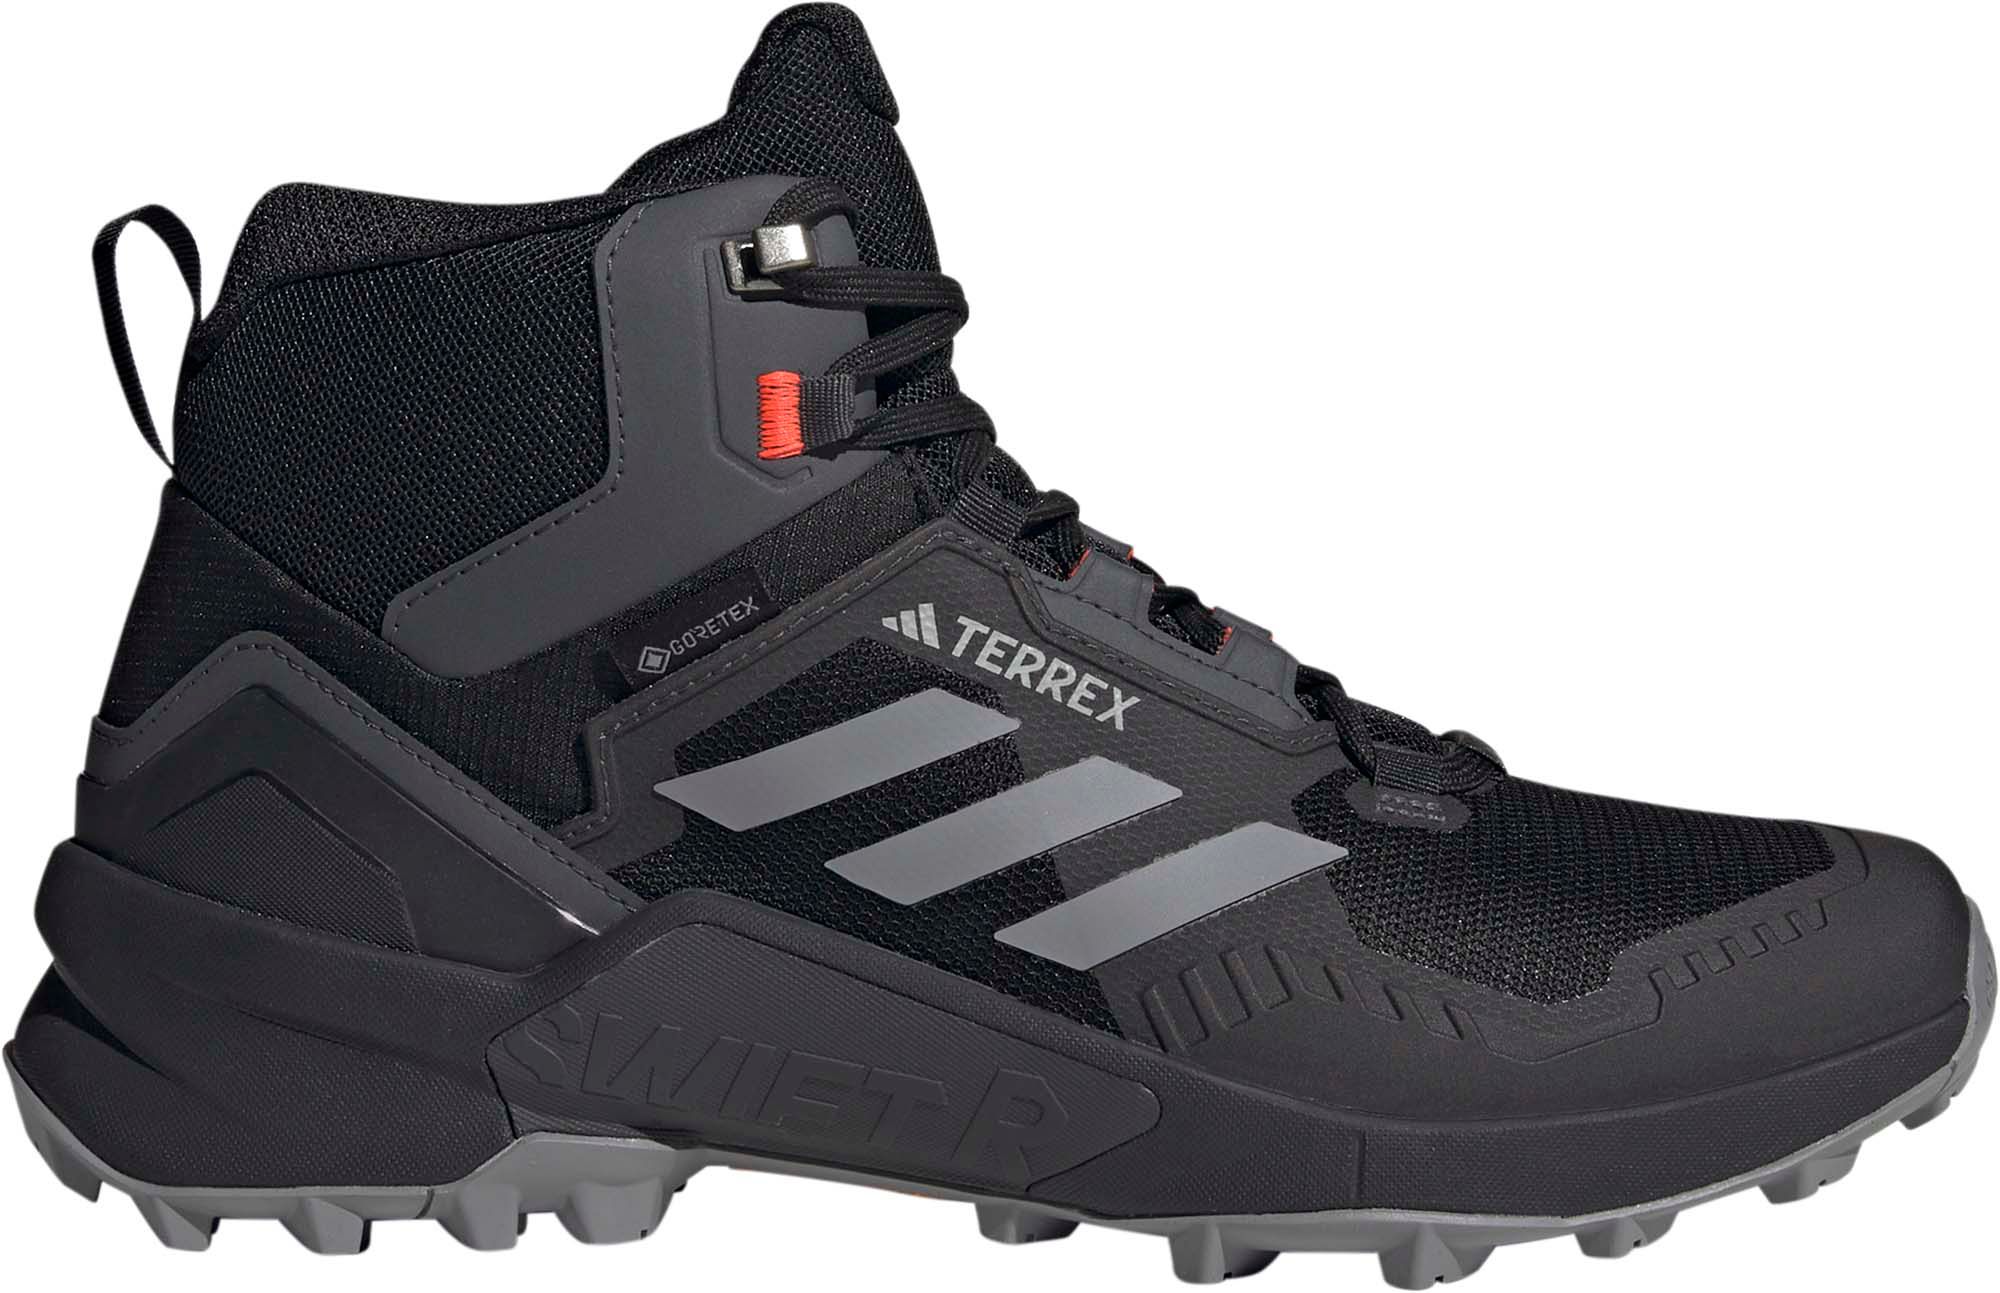 adidas men's terrex swift r3 mid hiking boots